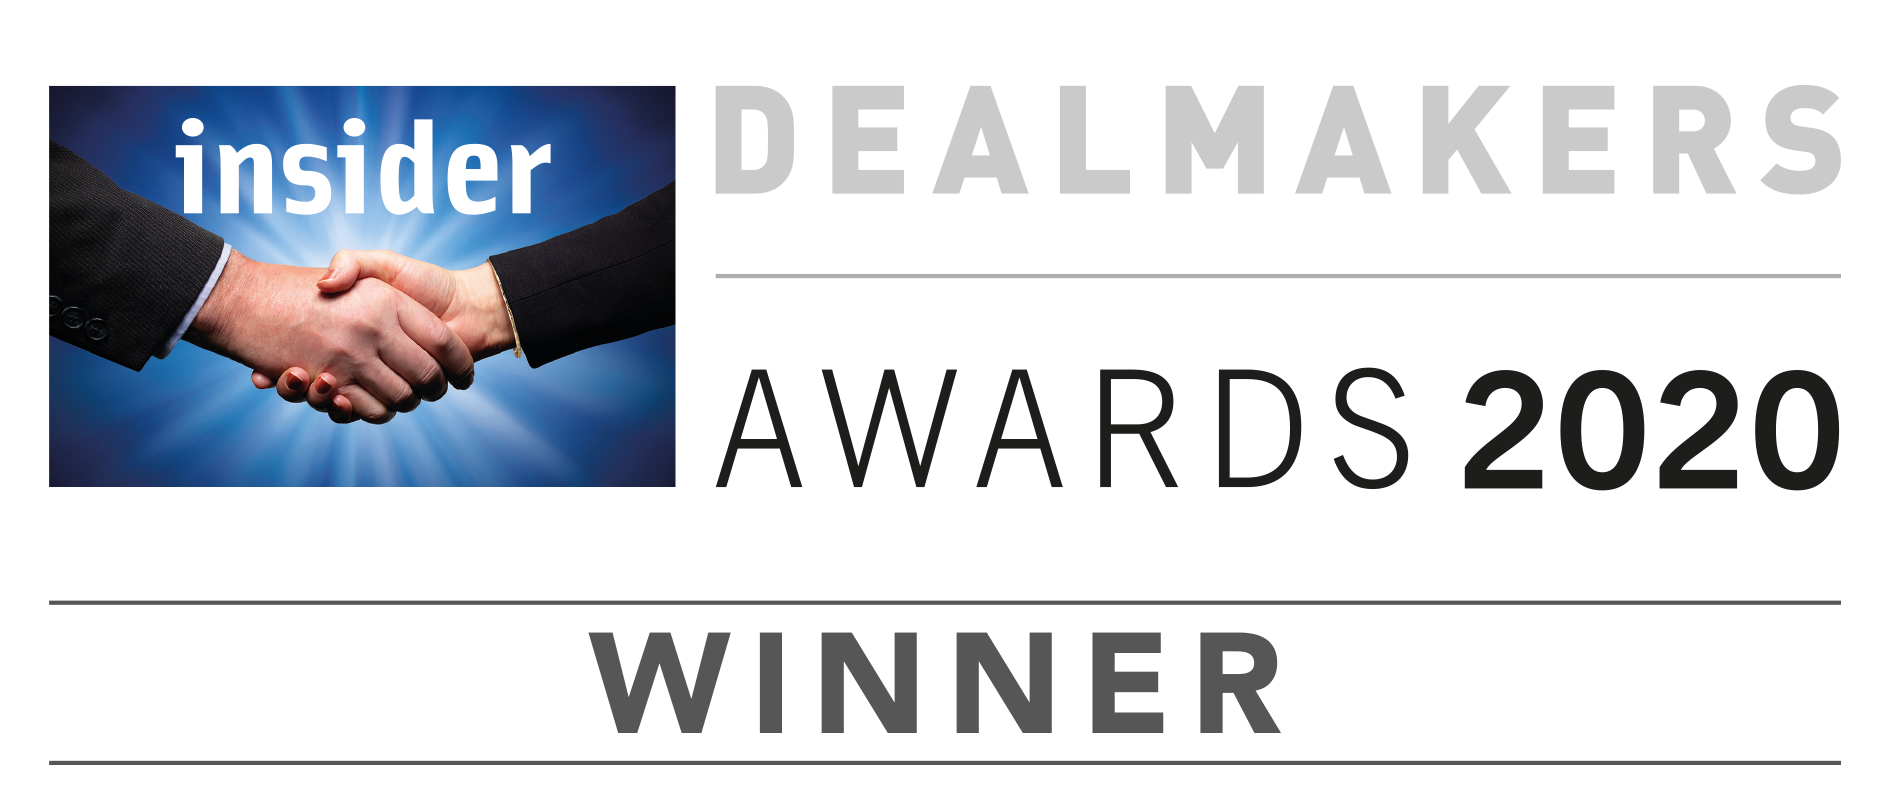 Insider Dealmakers Award Winners 2020